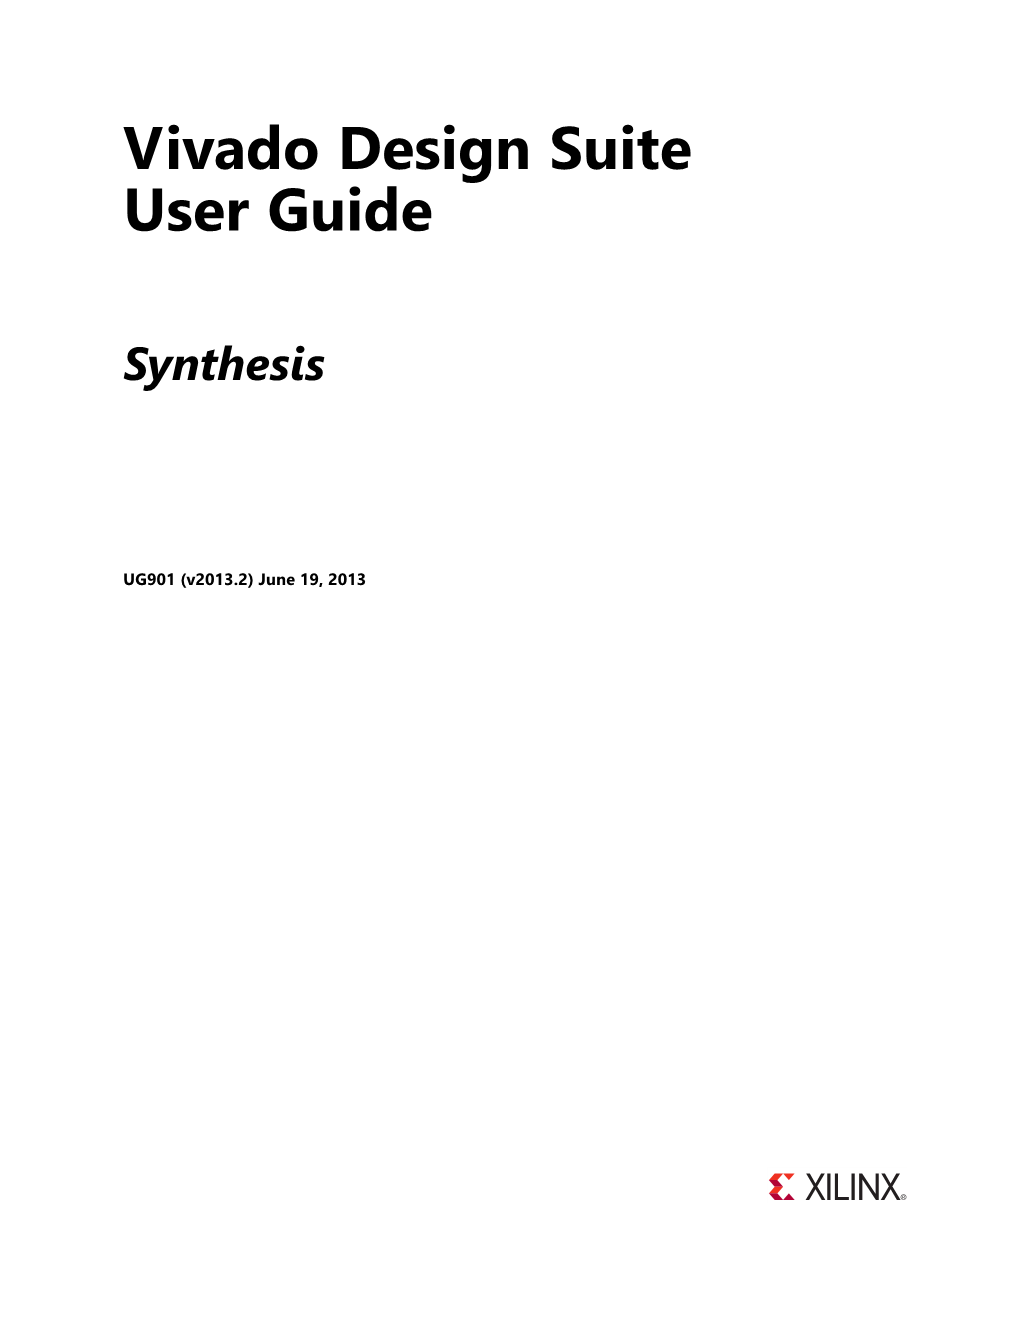 Xilinx Vivado Design Suite User Guide: Synthesis (UG901)